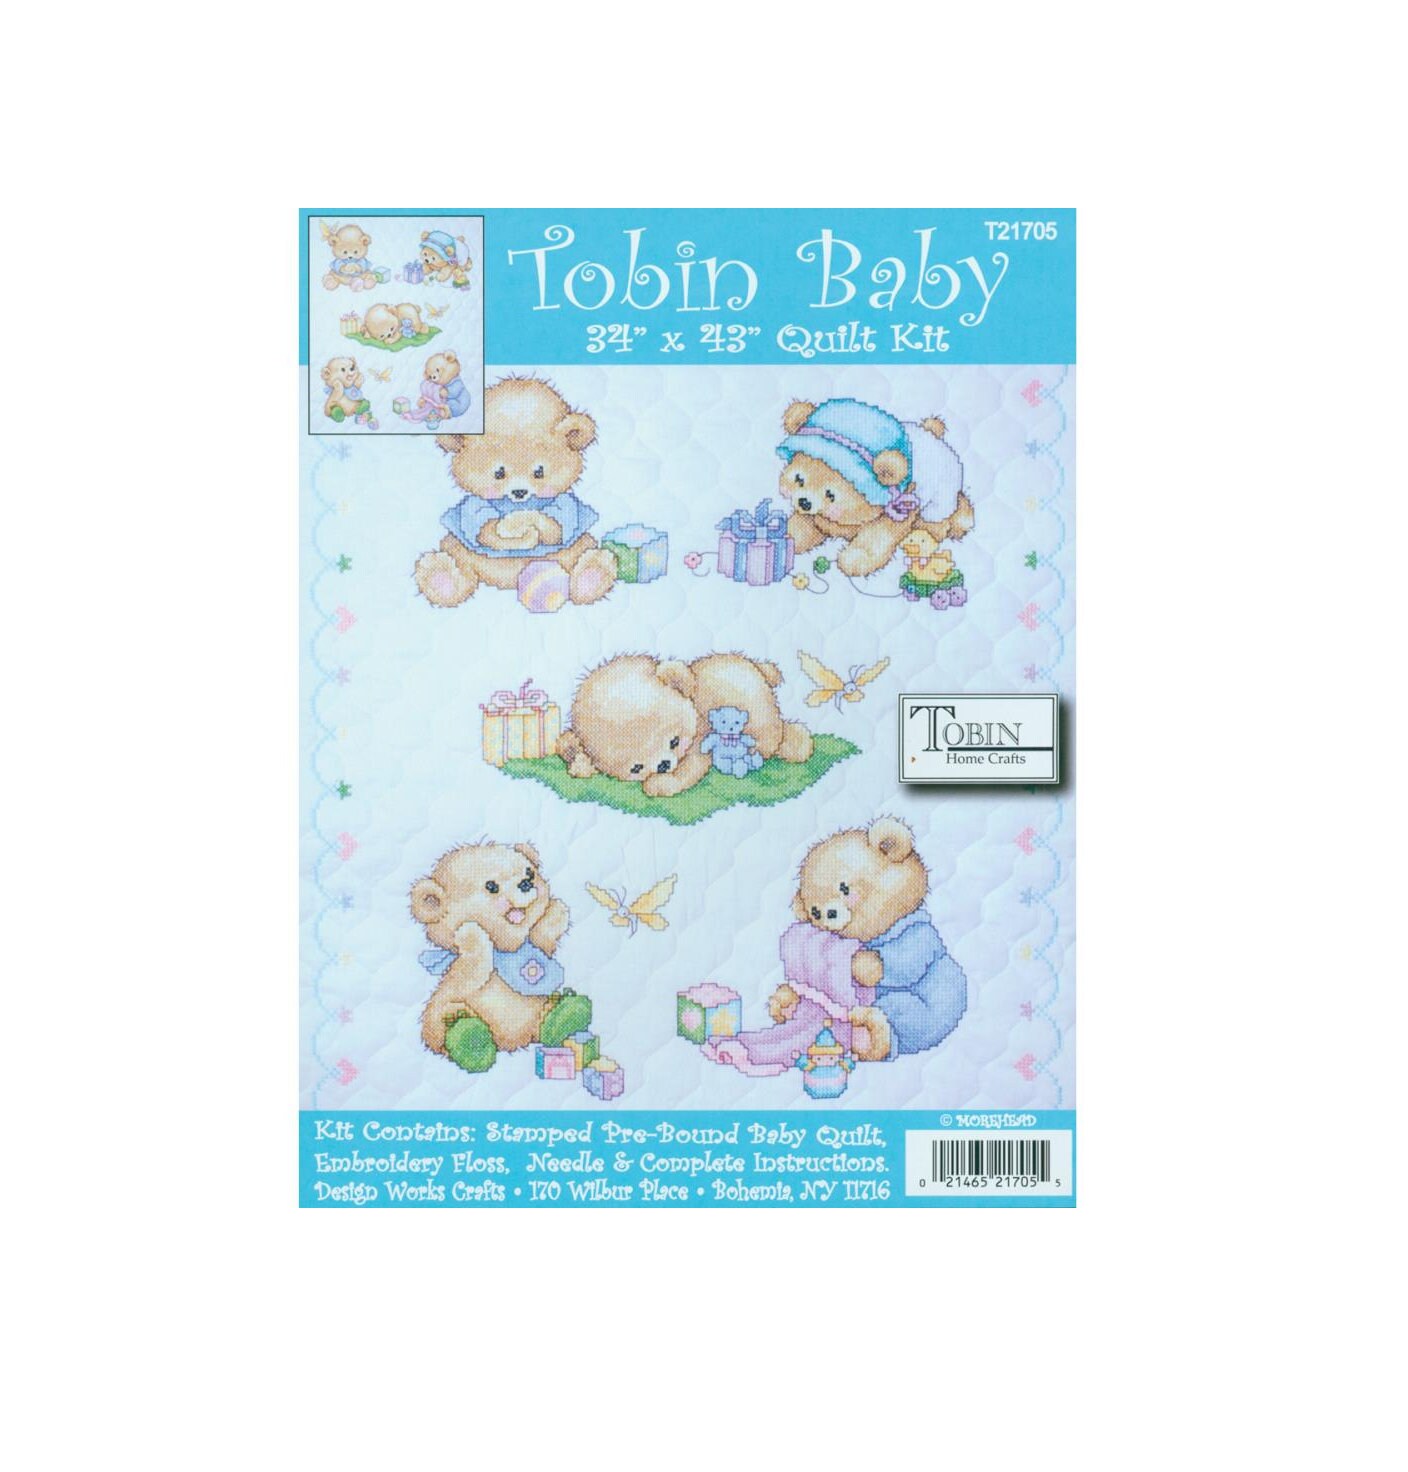 Baby Polar Bears Small Christmas Stocking Cross Stitch Pattern